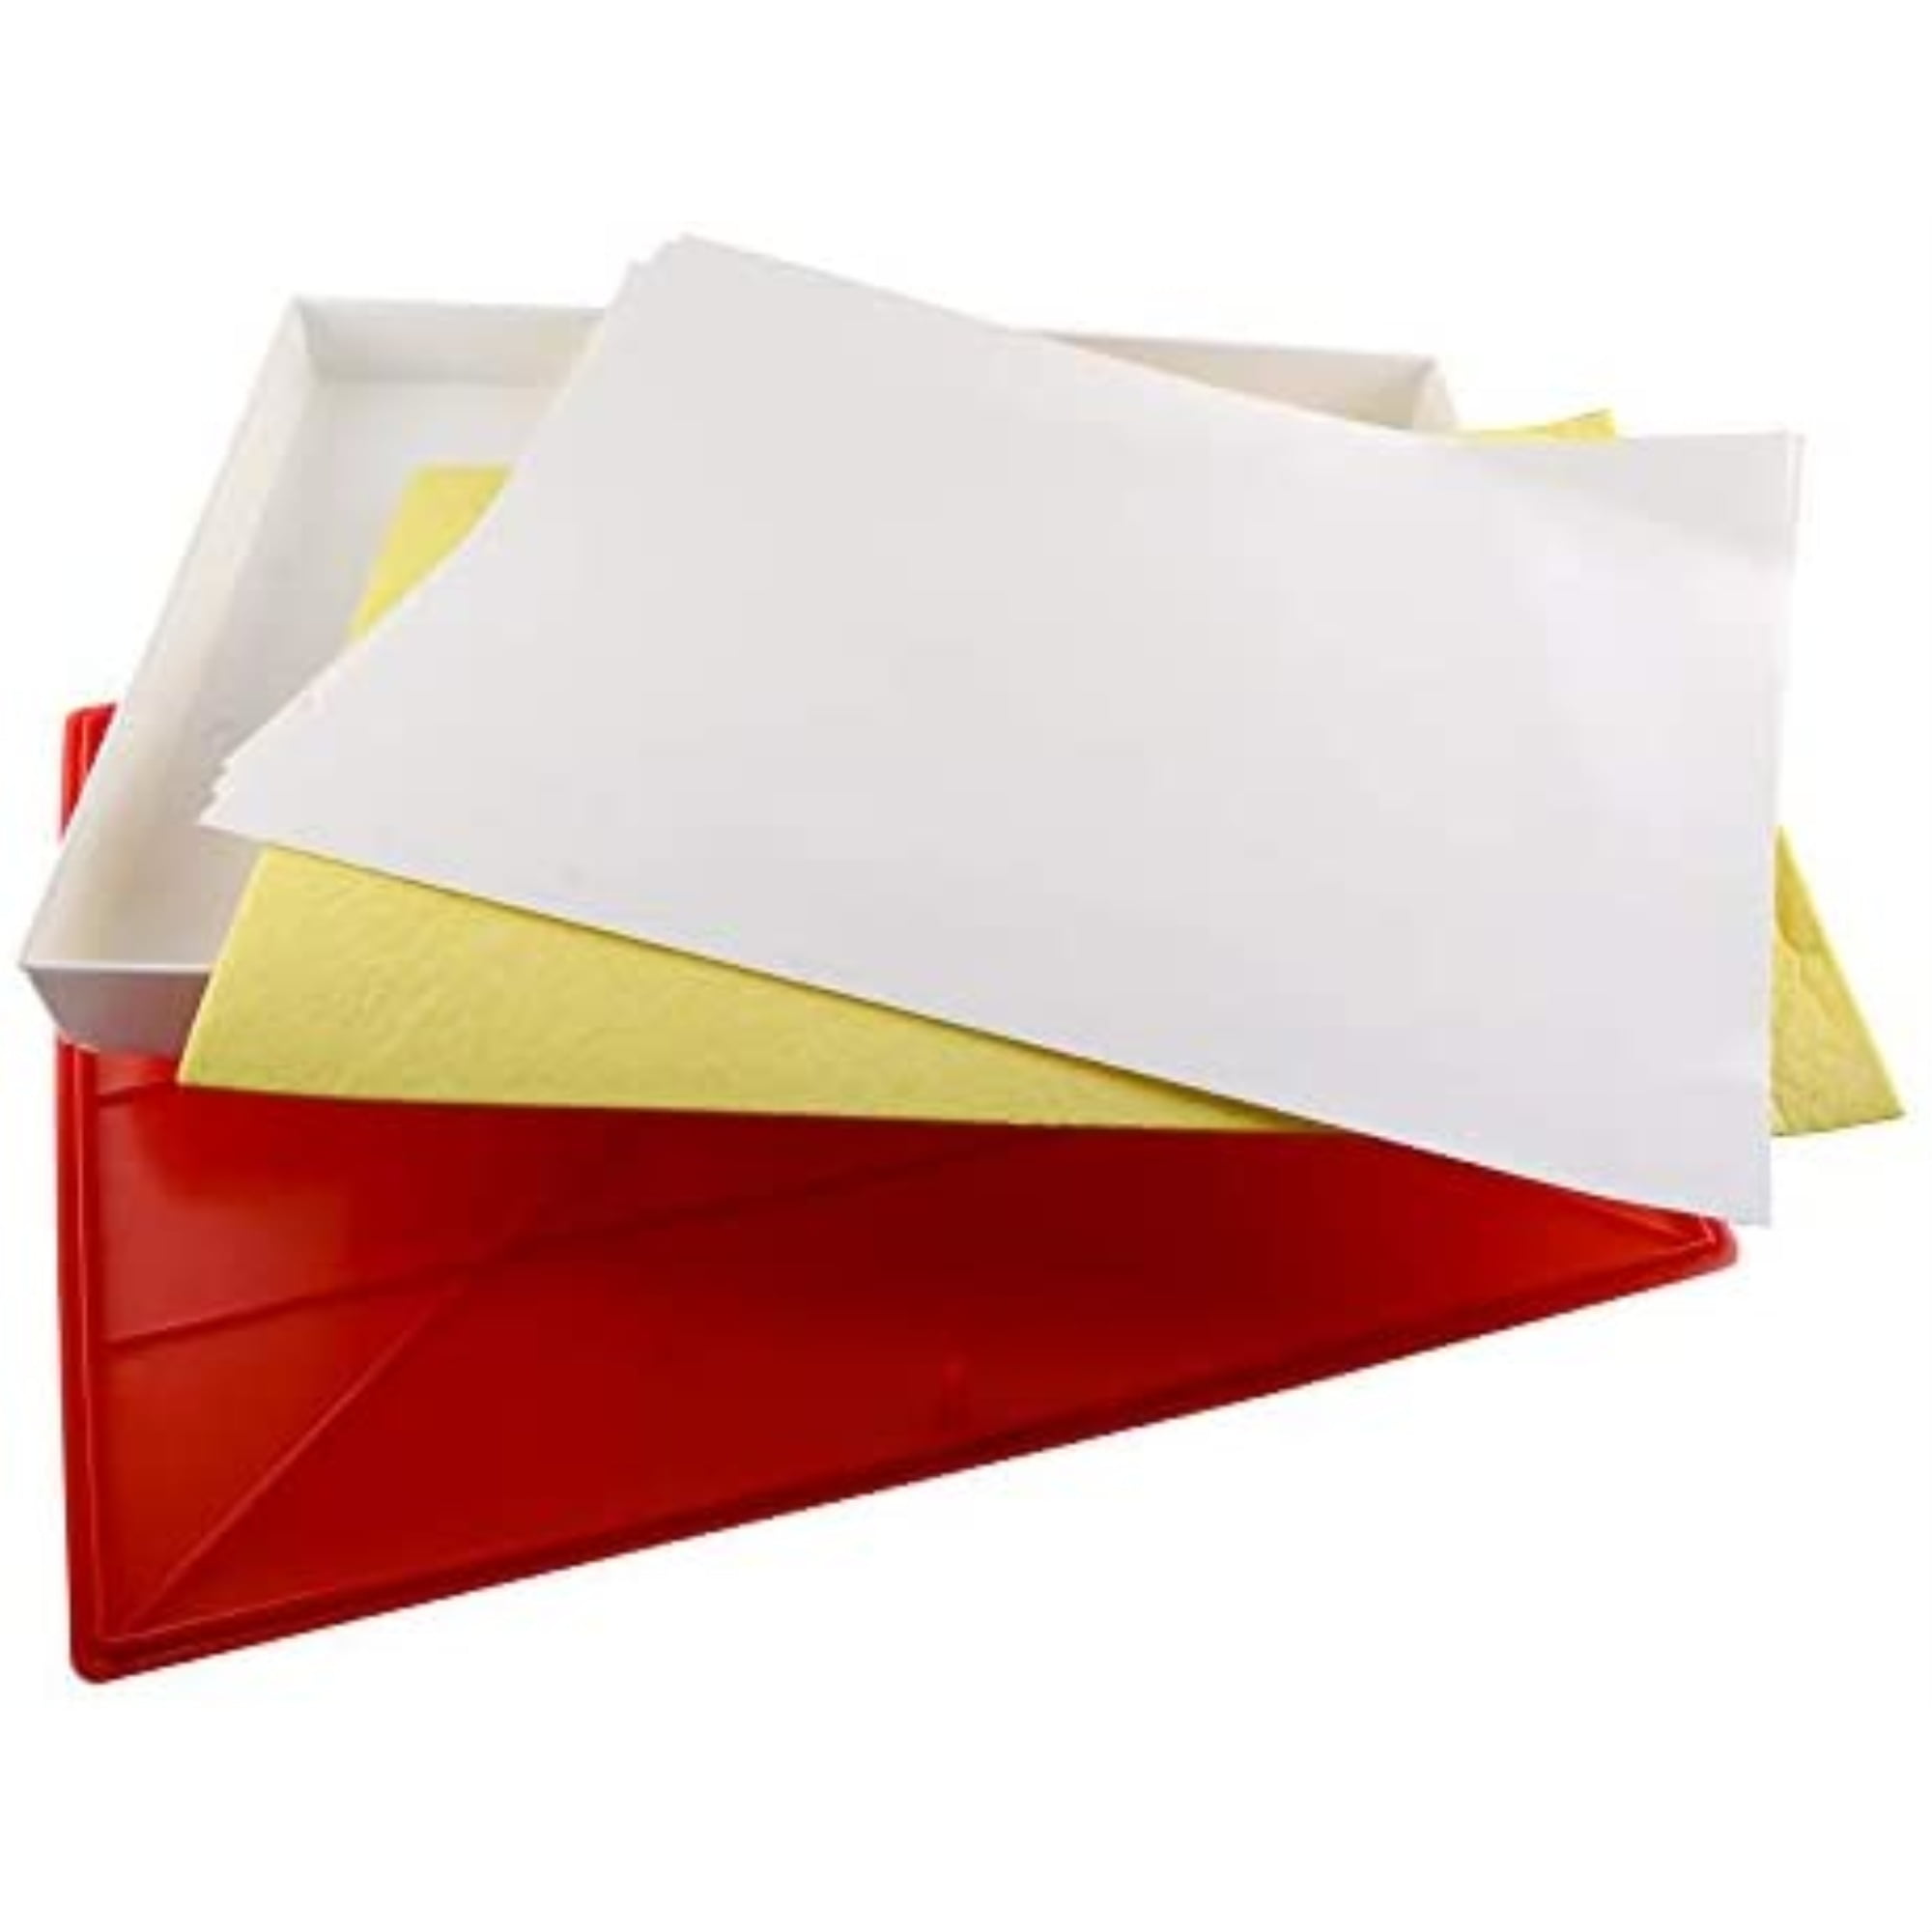 Masterson Sta-Wet Premier Art PALETTE BOX Red 16”x 12” Sponge